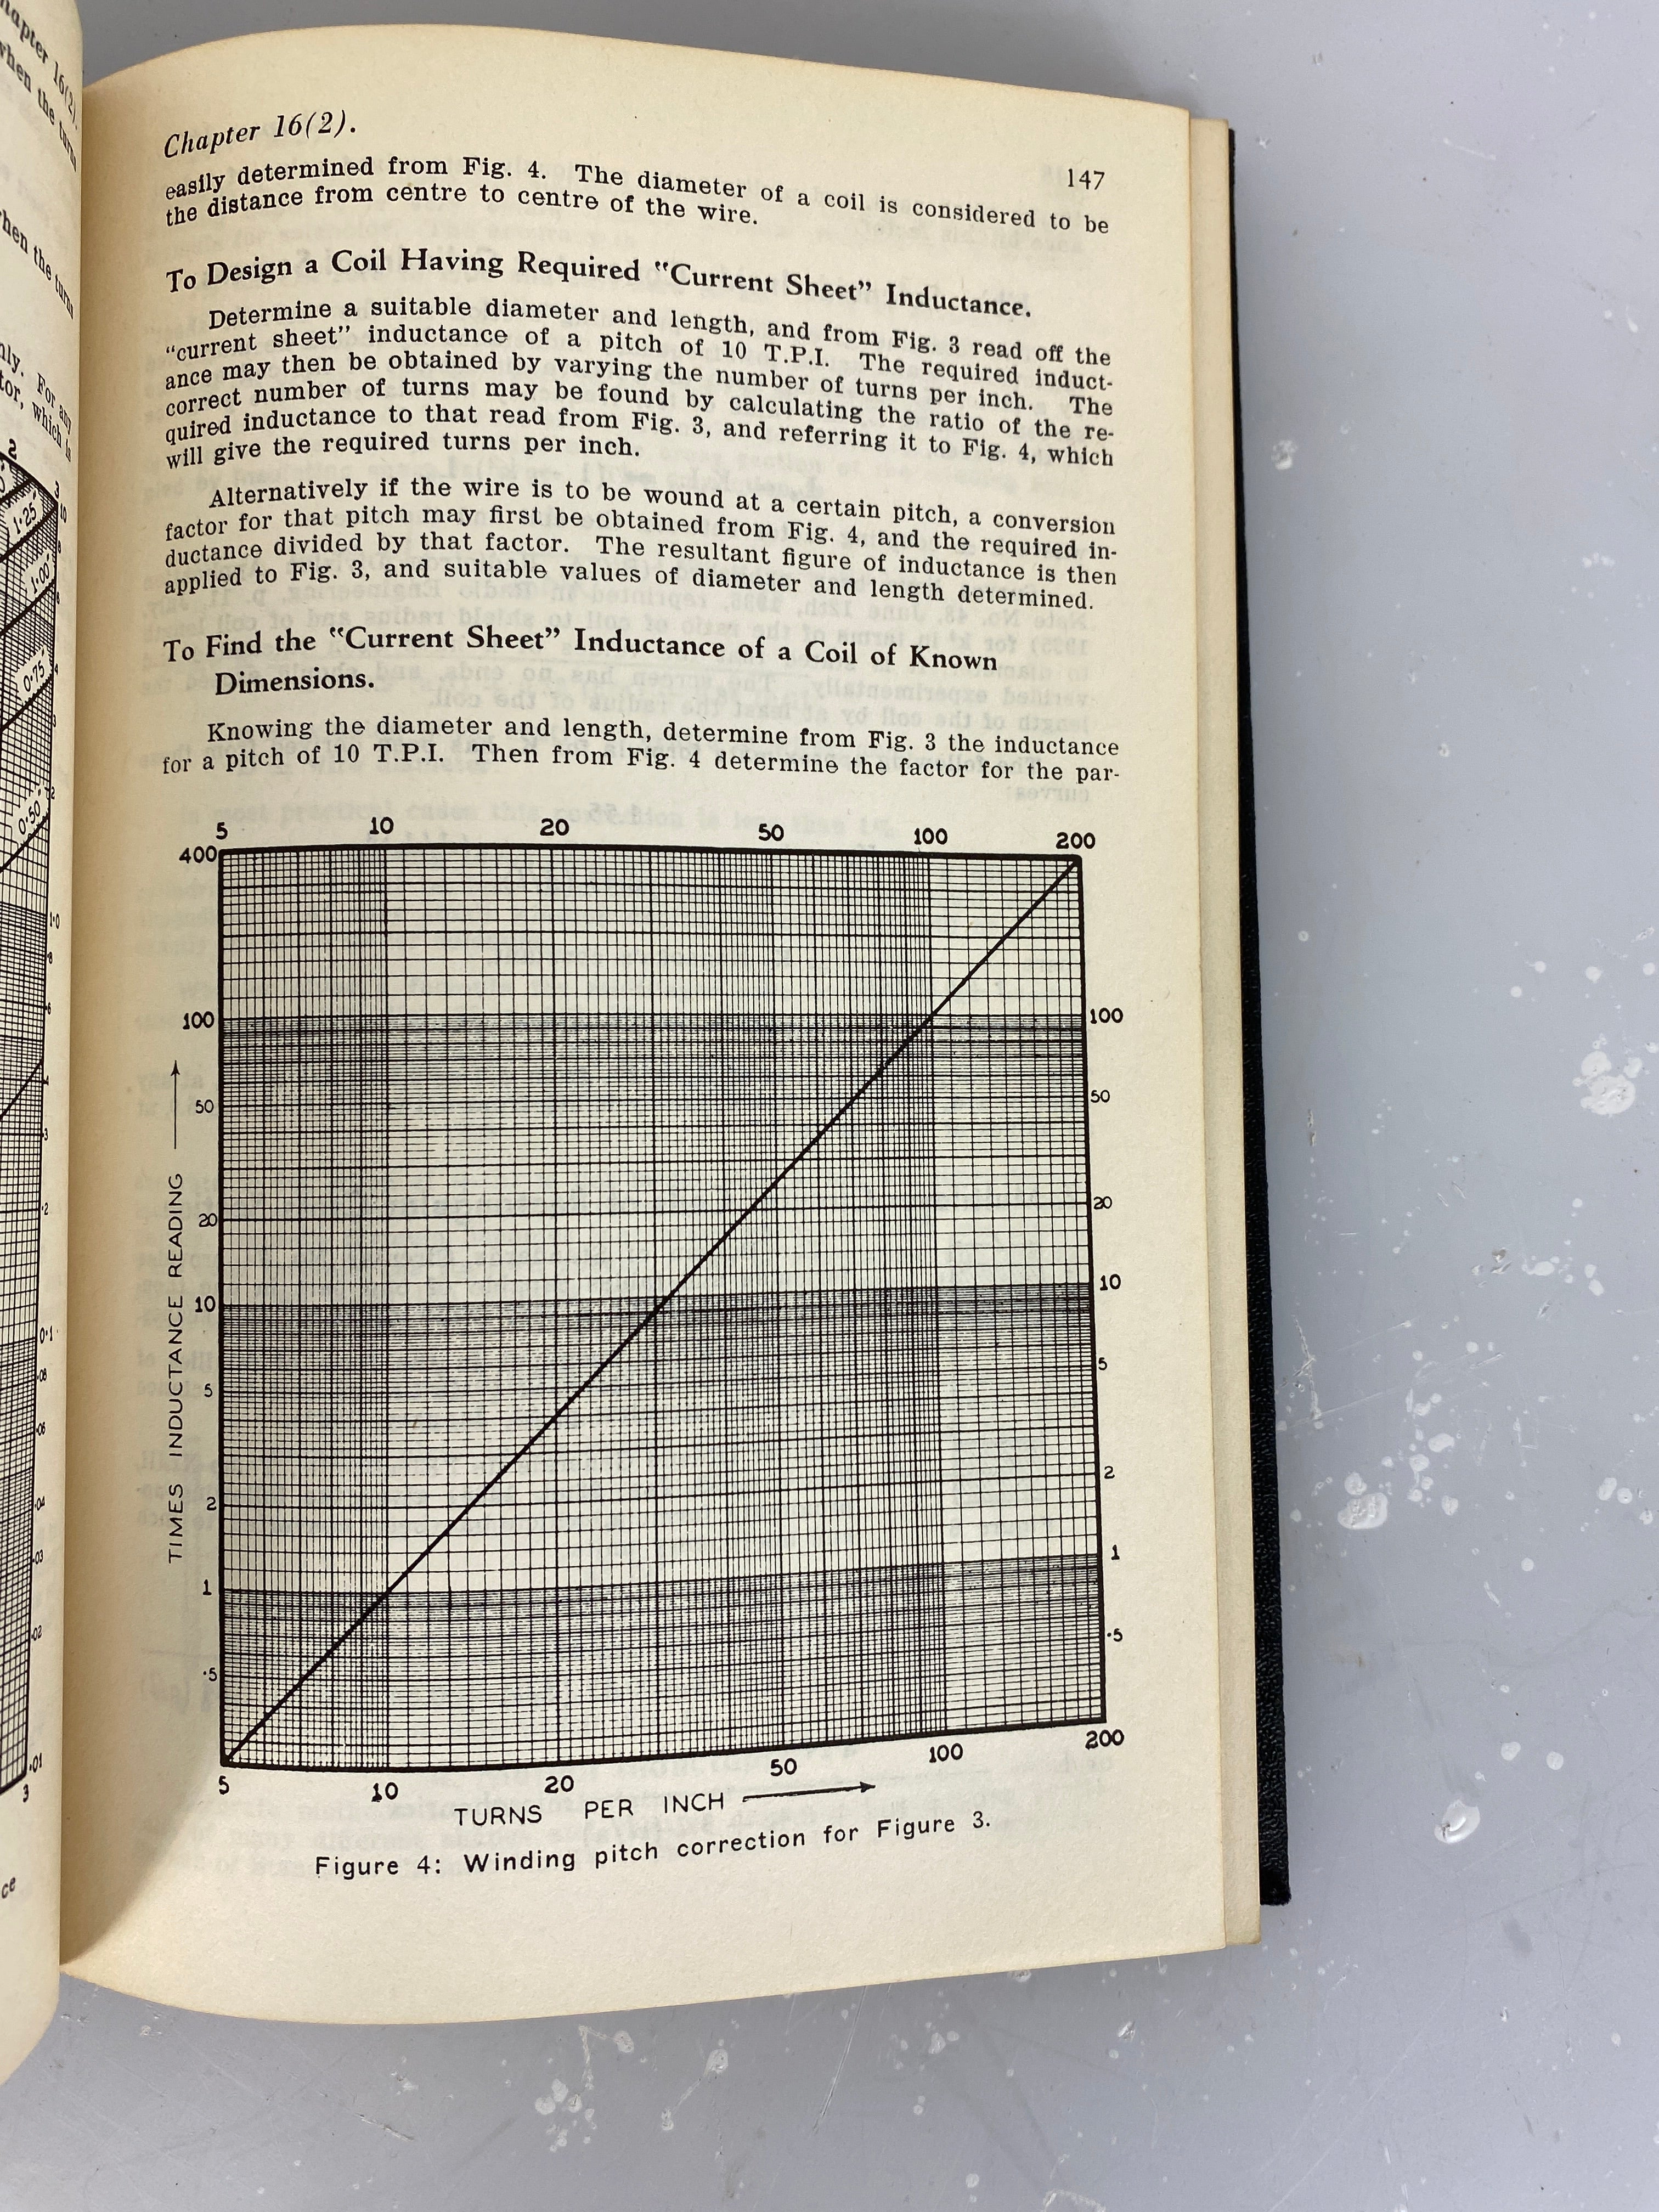 The Radiotron Designer's Handbook Third Edition by F. Langford Smith RCA 1941 HC